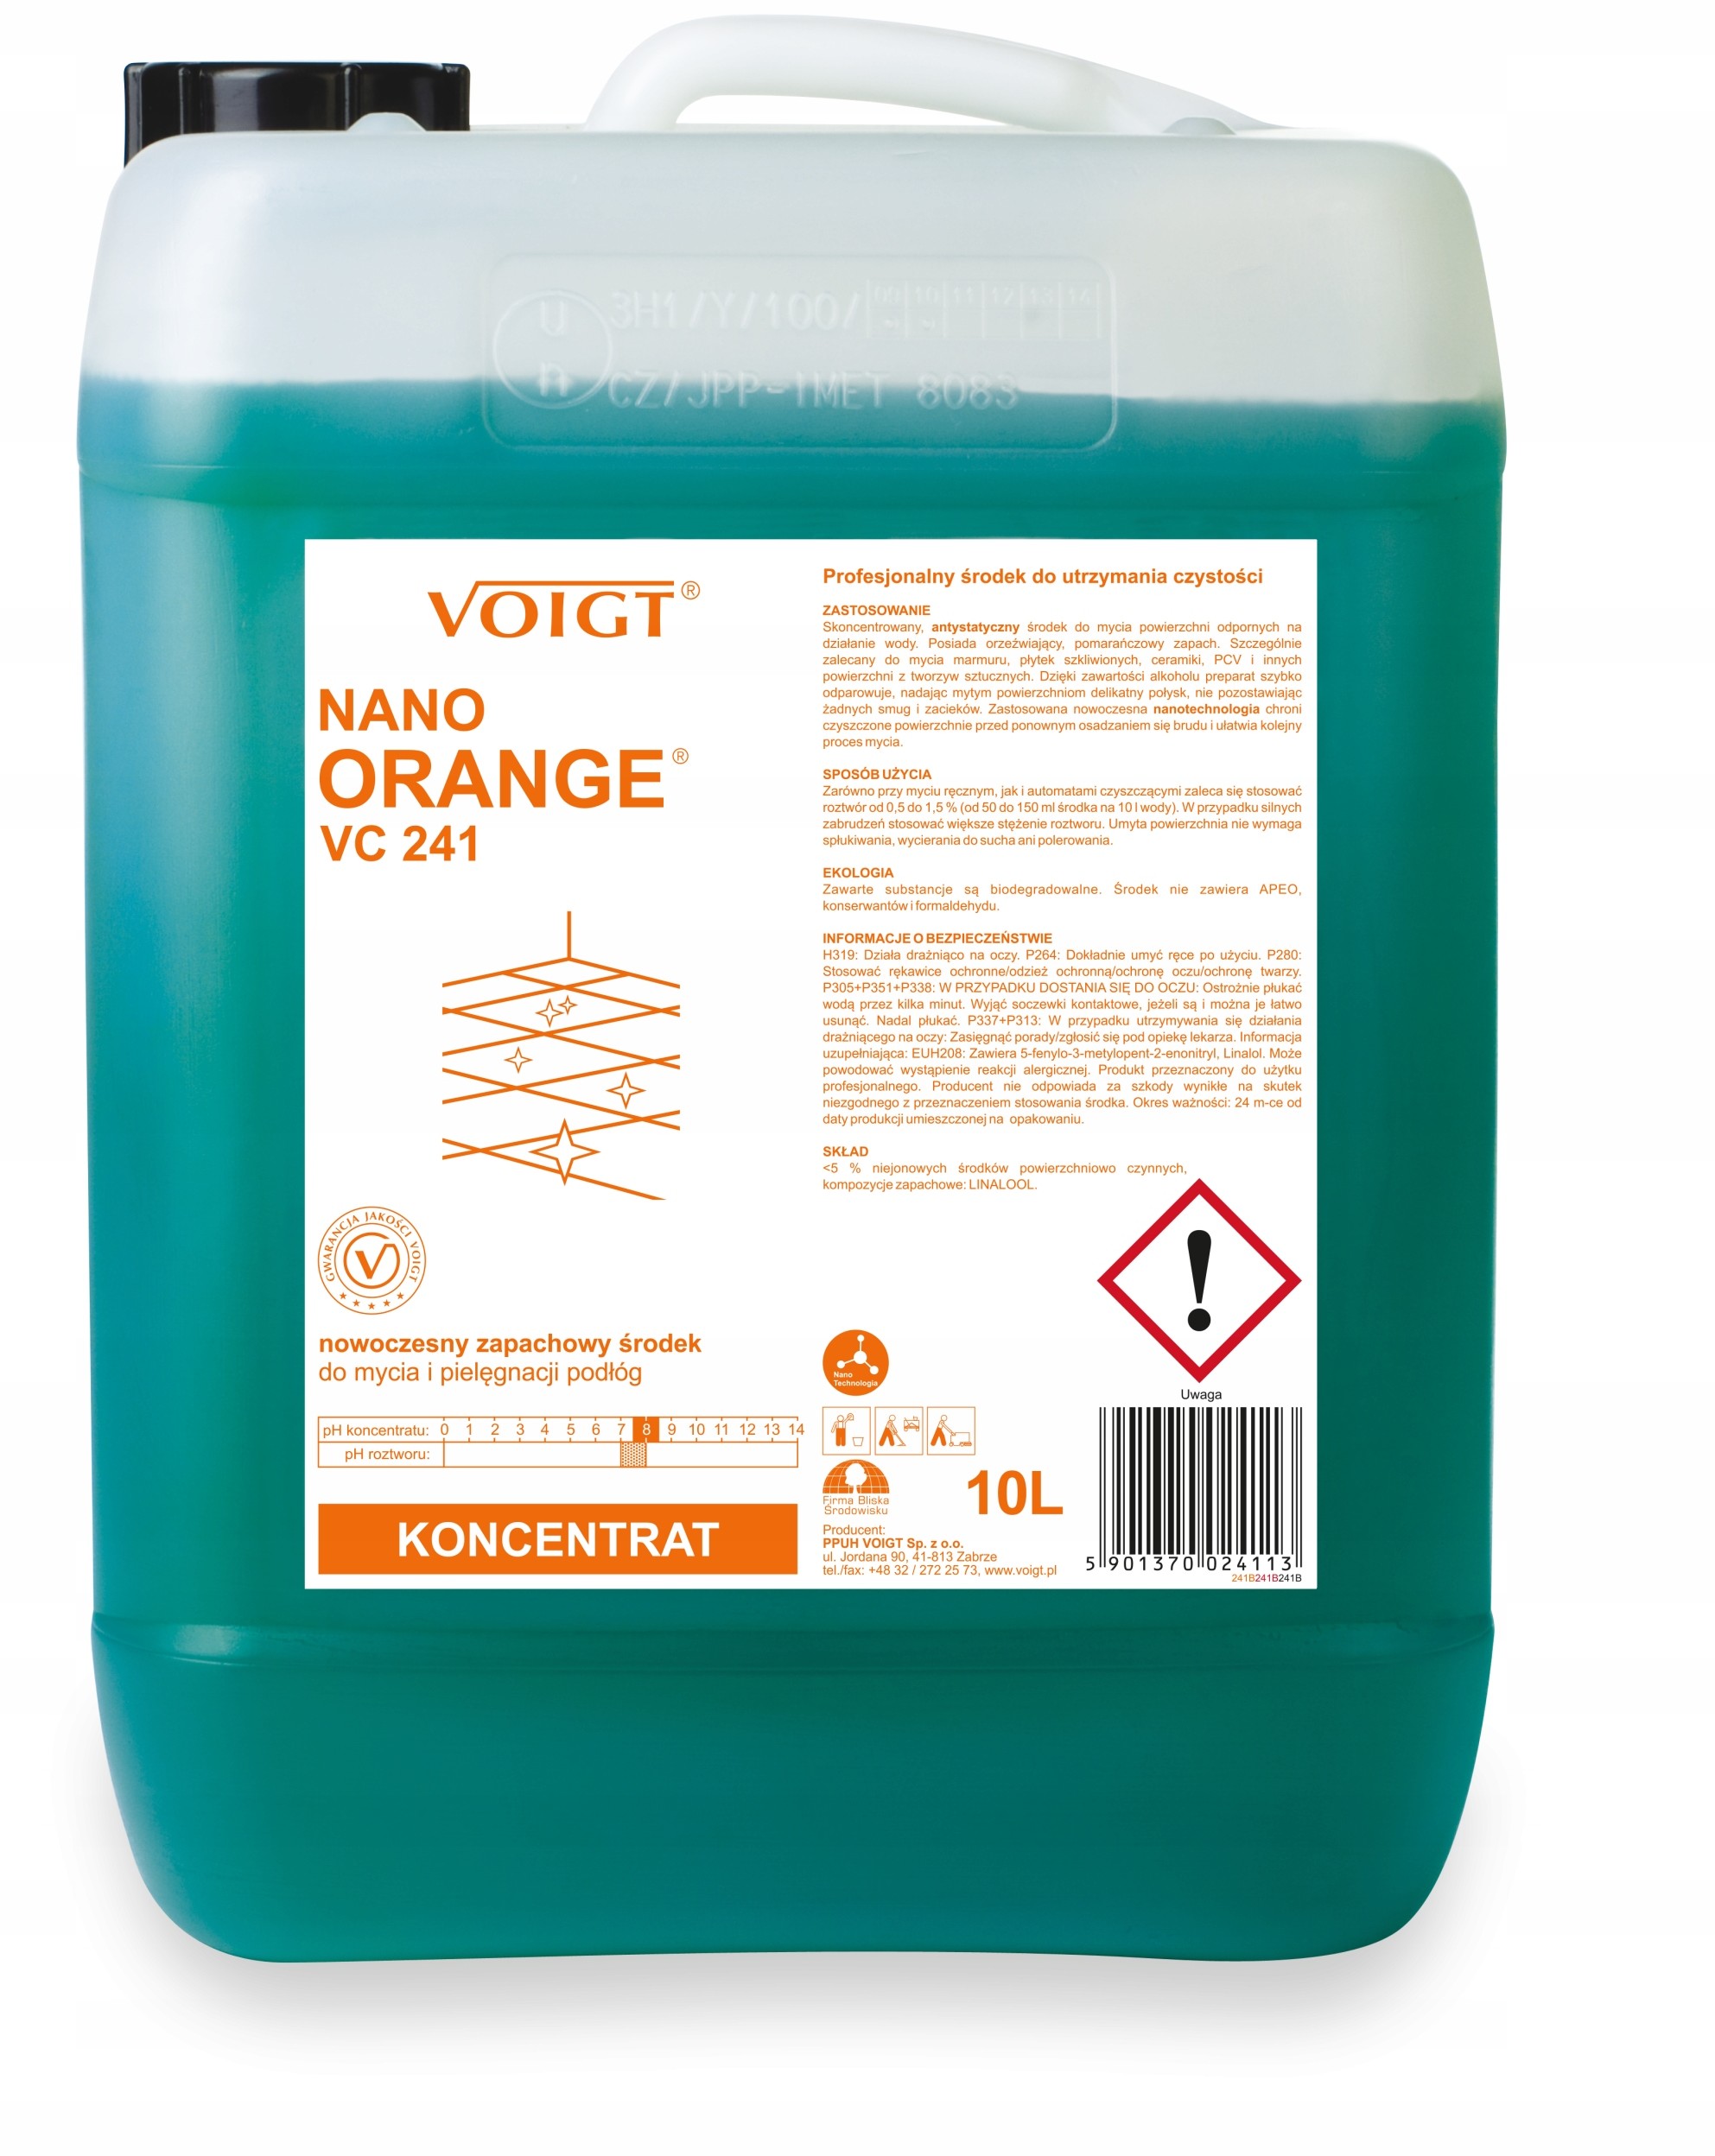 Voigt Nano Orange VC 241 marmur ceramika Pcv 10L